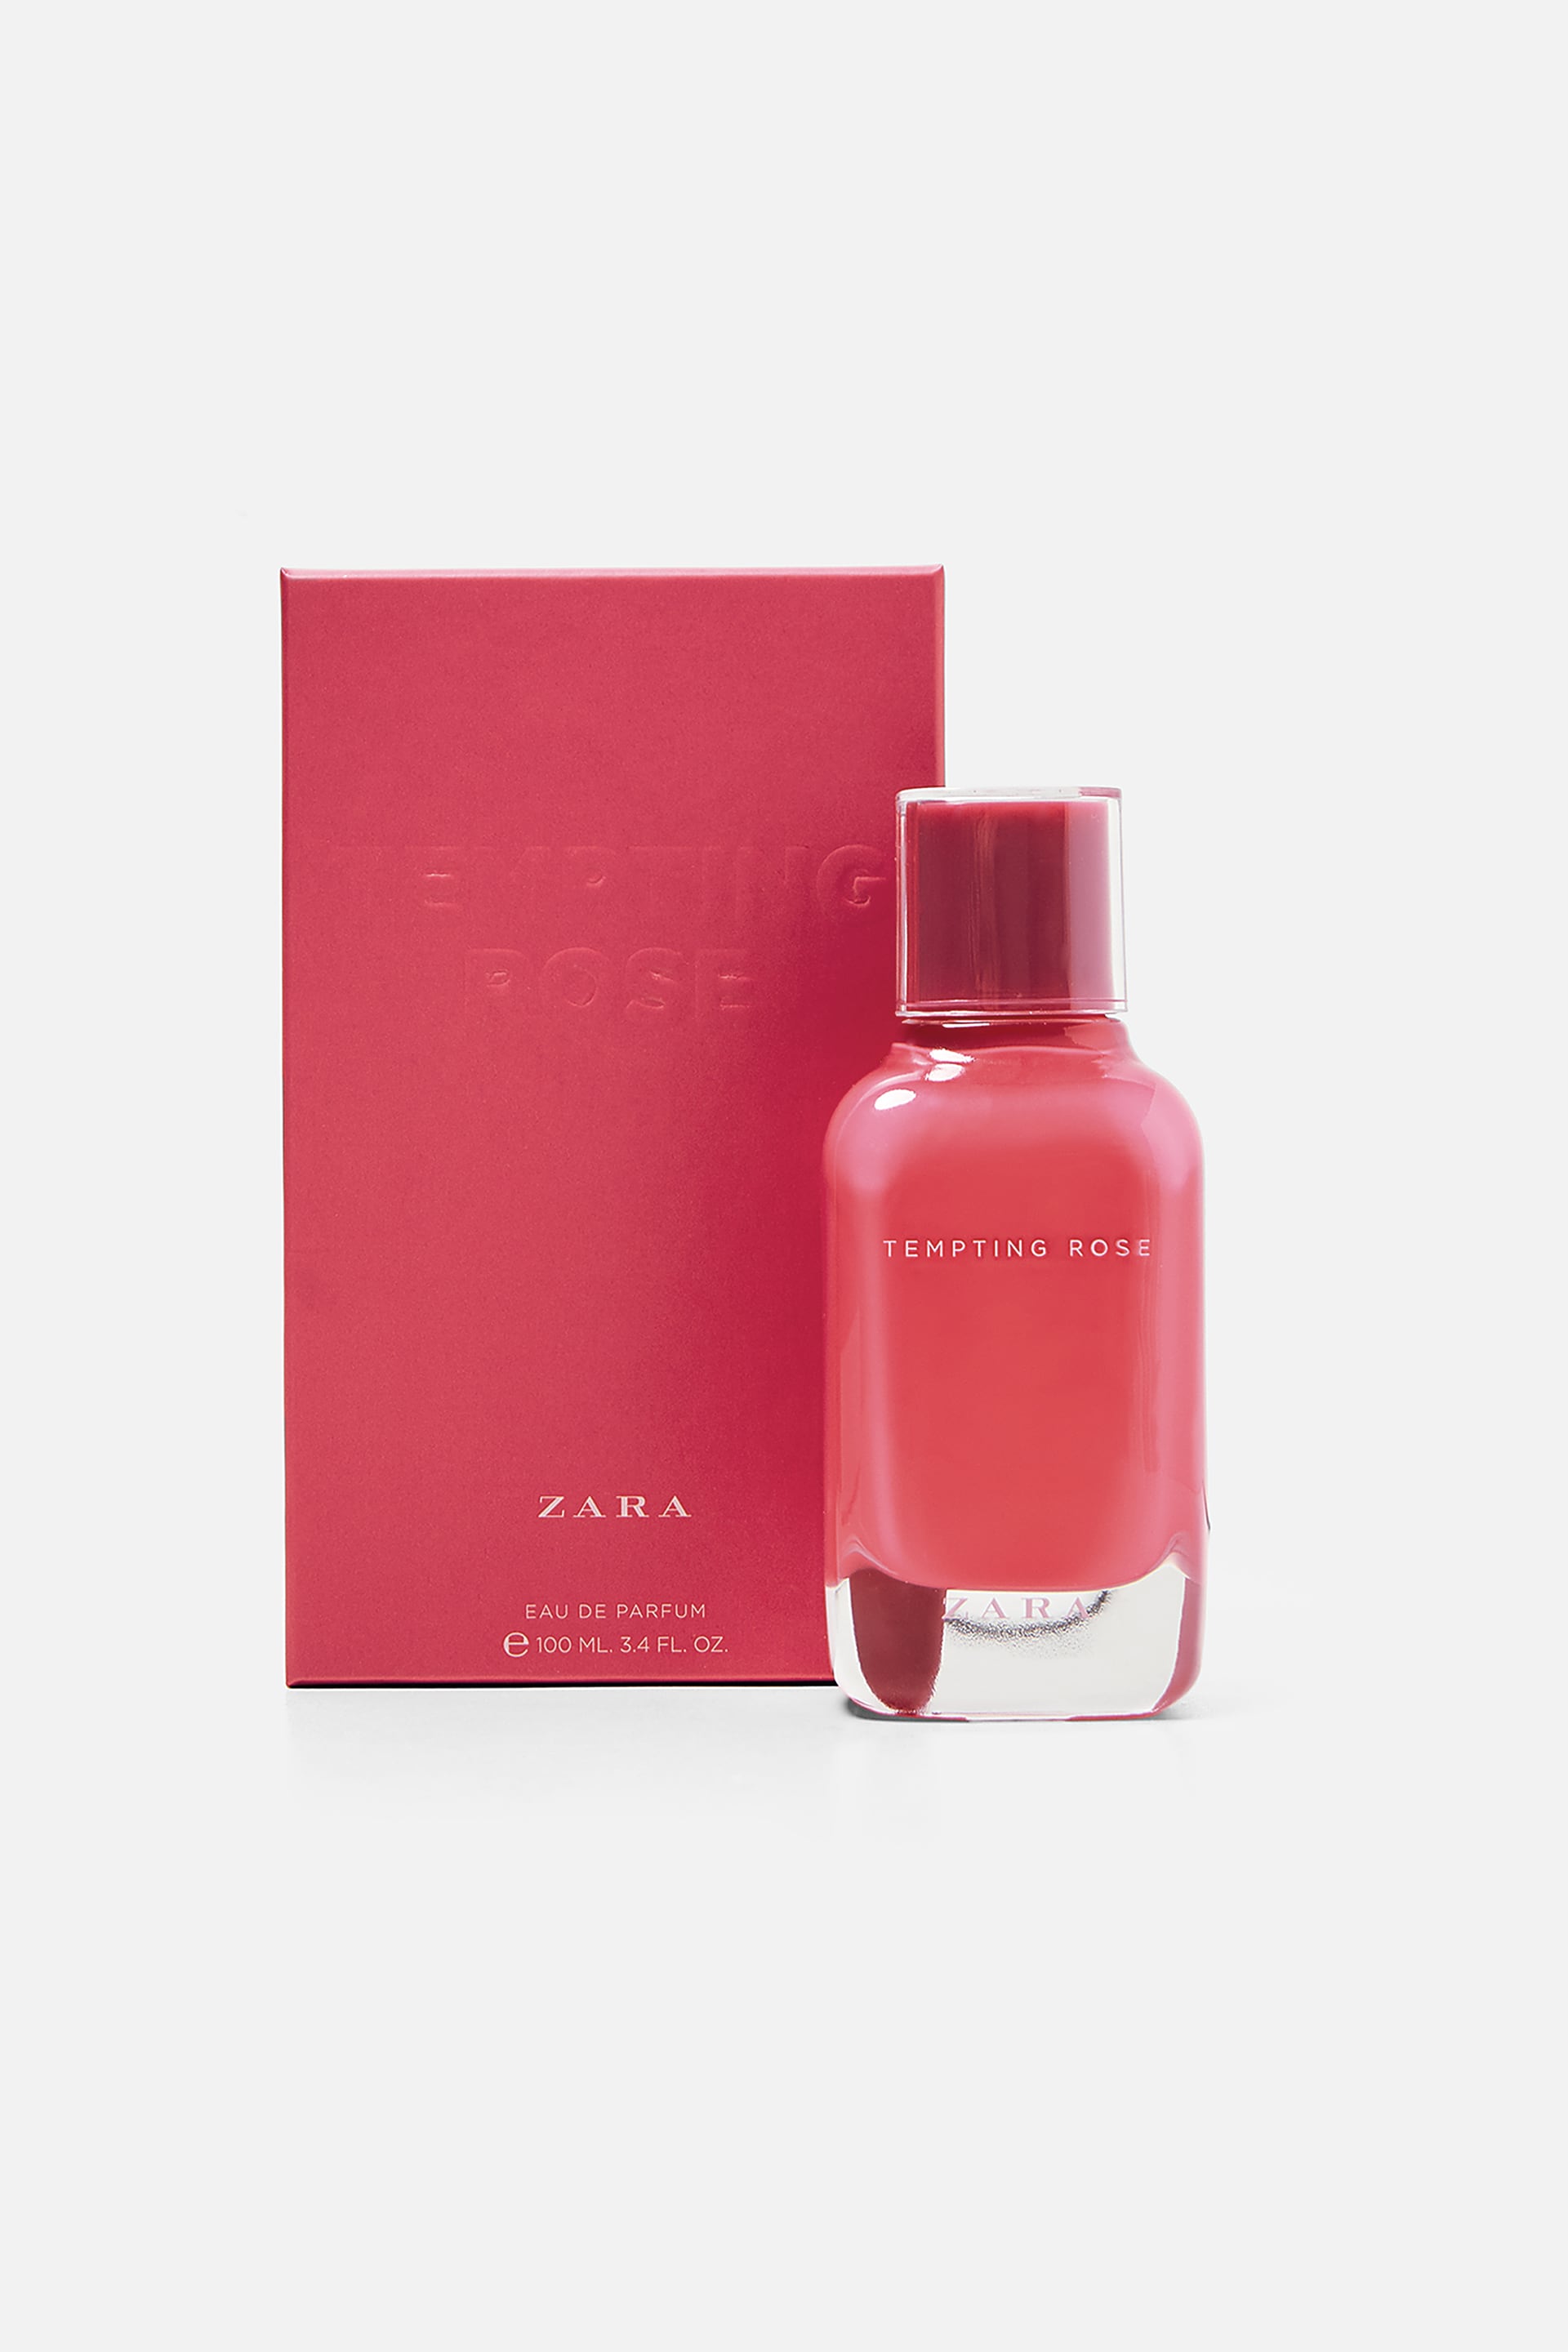 Tempting Rose Zara perfume - a novo fragrância Feminino 2018